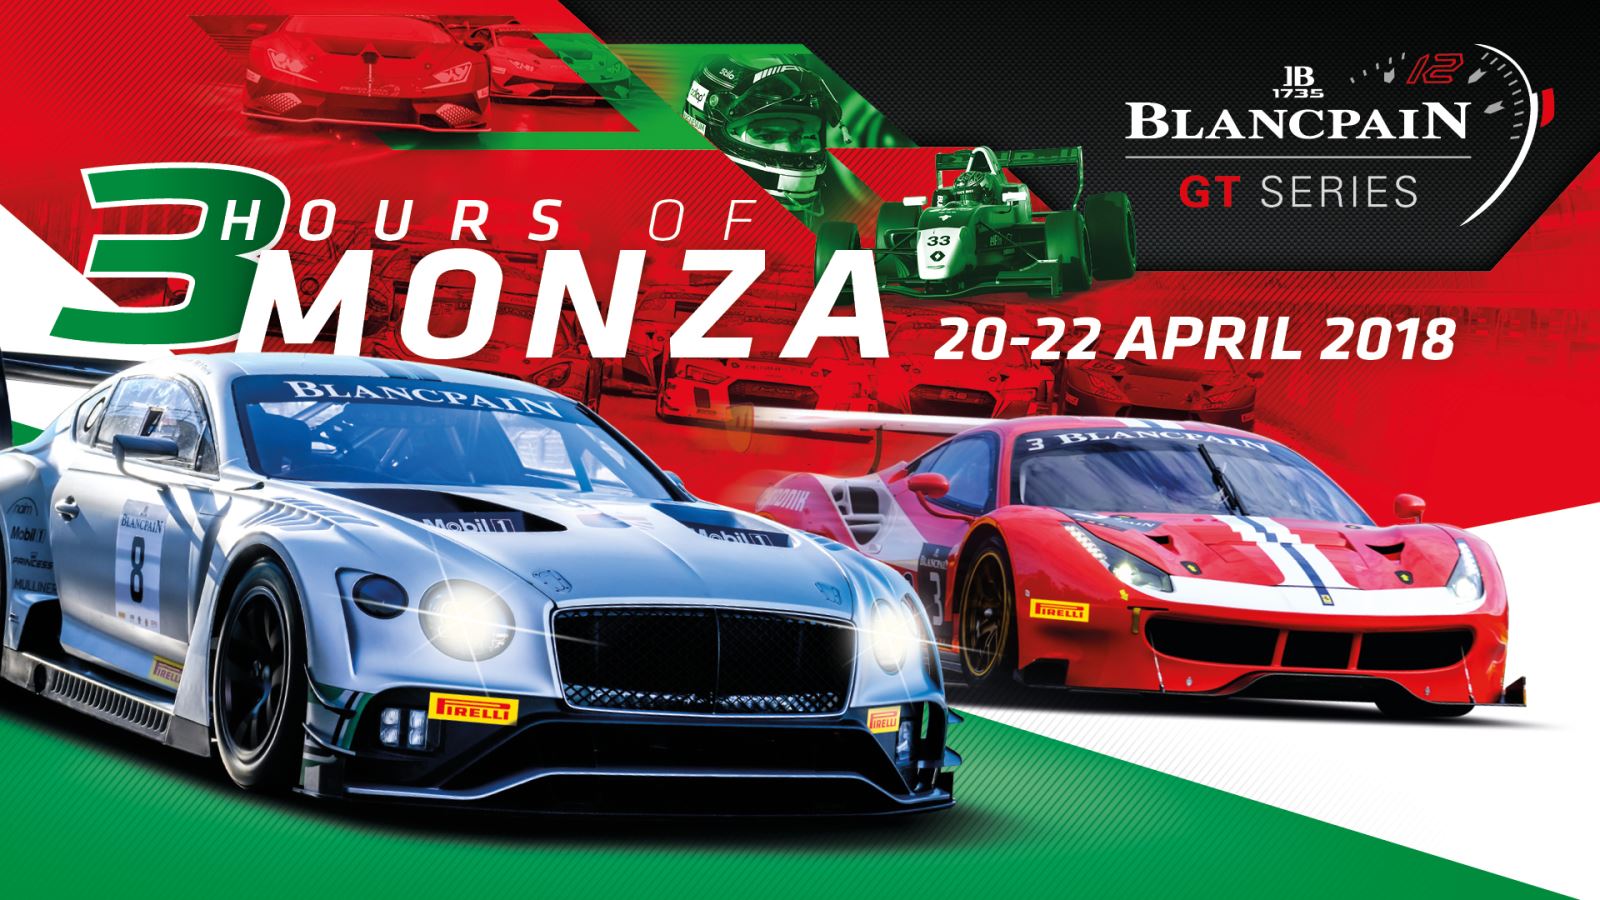 Impressive 54-car grid for Blancpain GT Series Endurance Cup opener Monza -